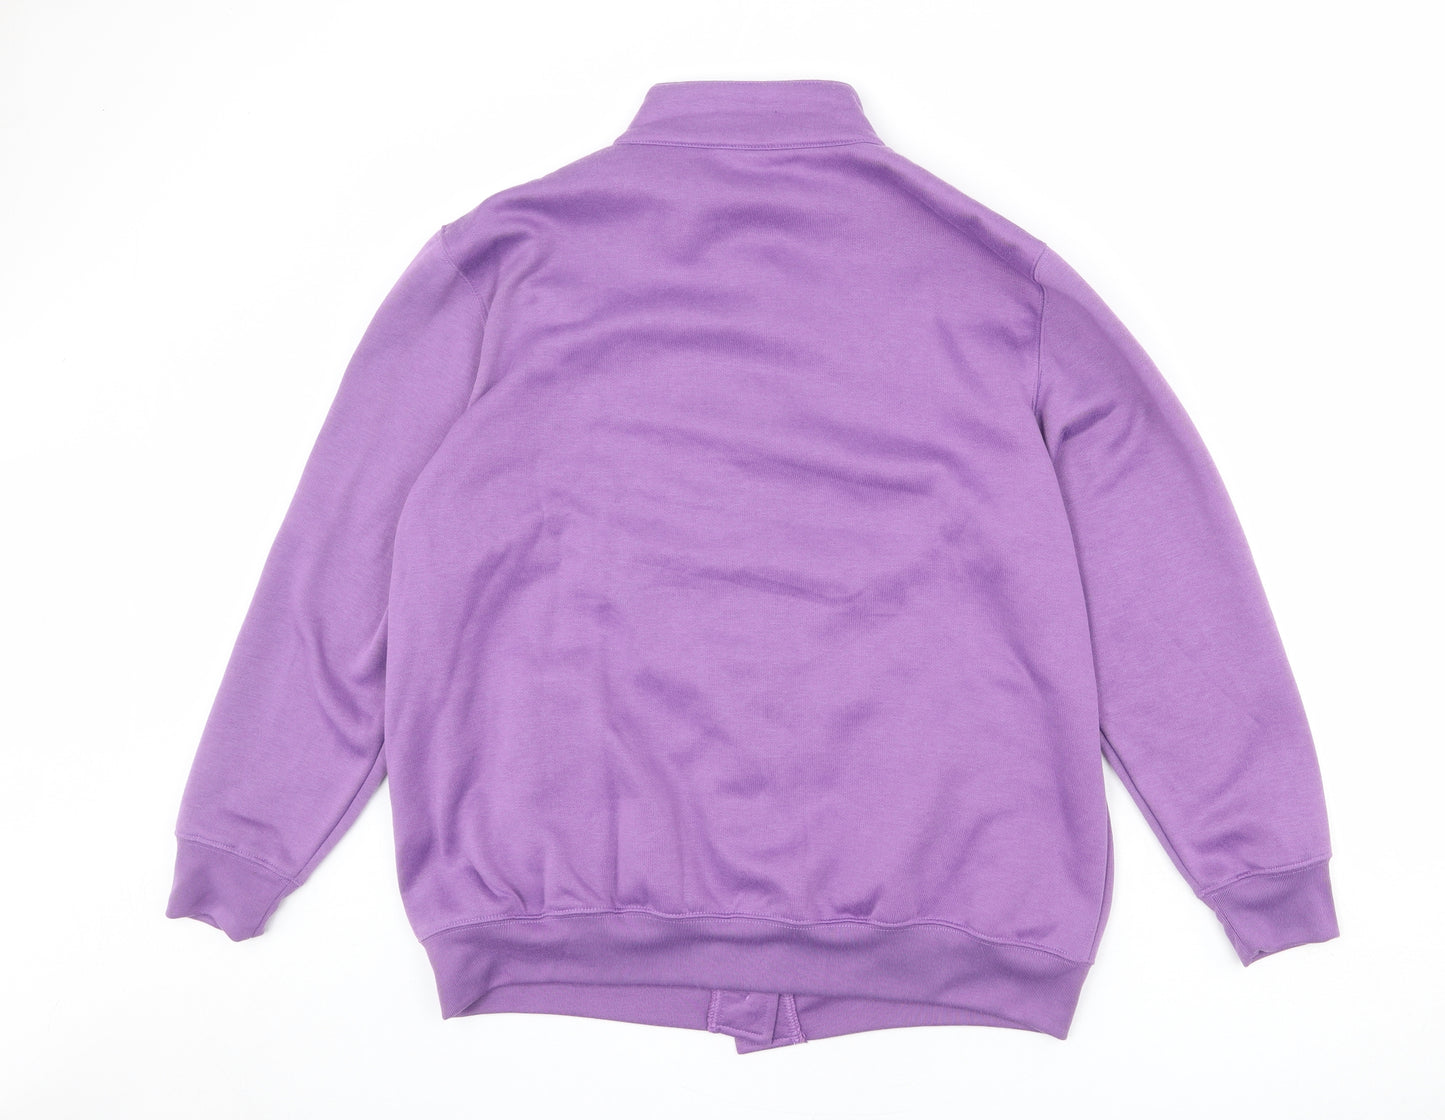 Damart Womens Purple Bomber Jacket Jacket Size 18 Button